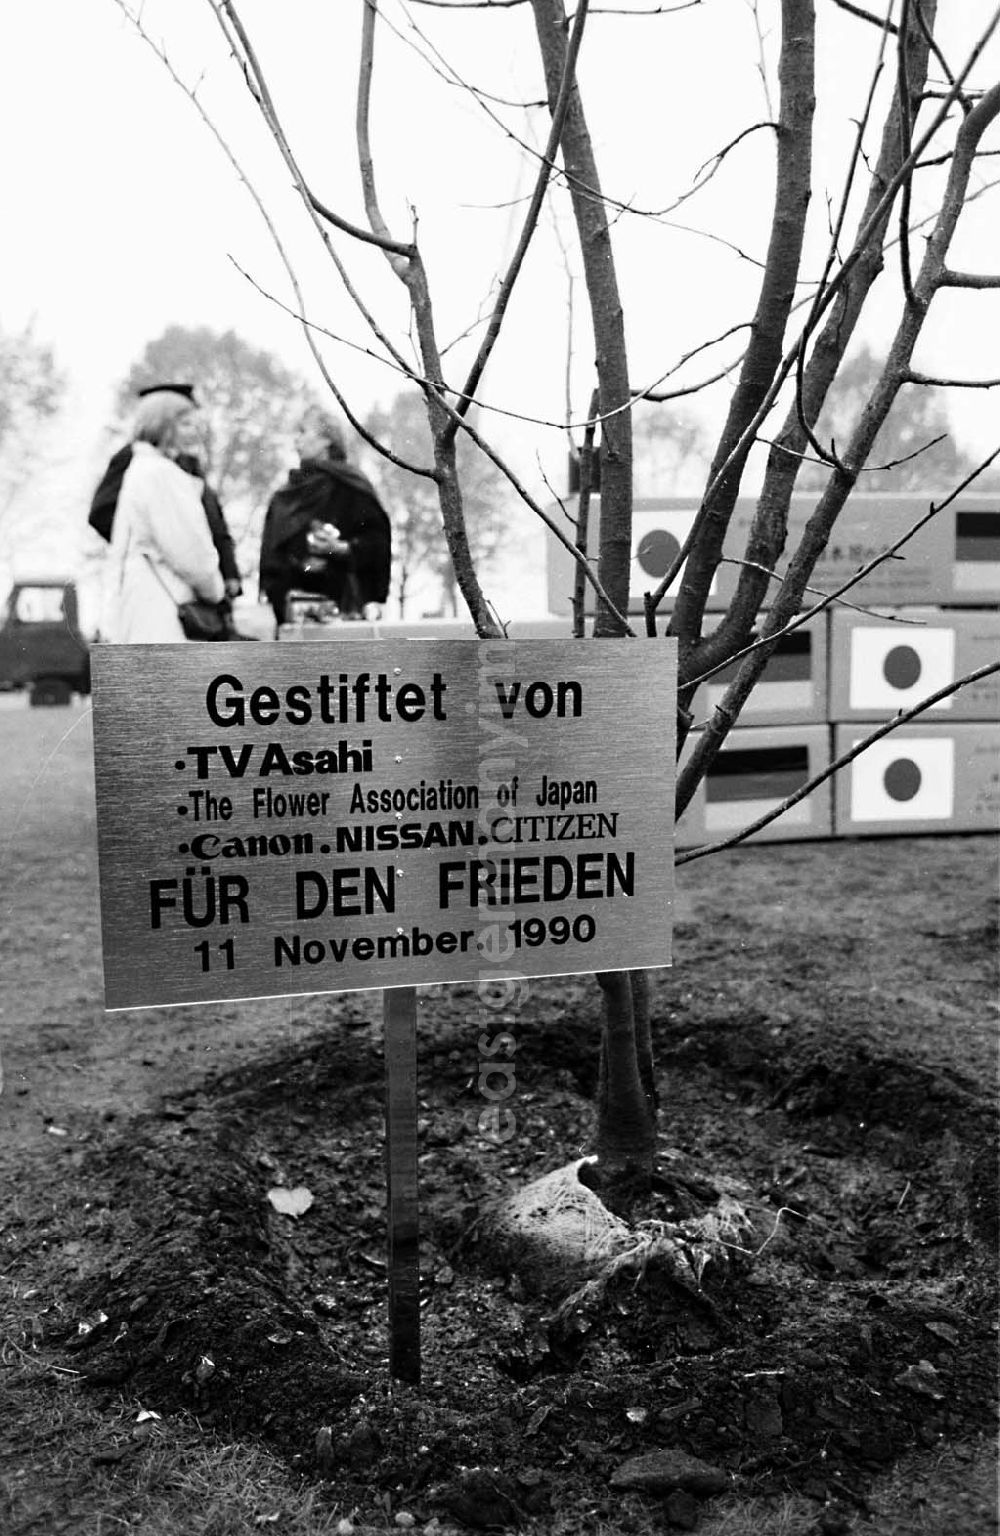 GDR image archive: Mitte / Berlin - Kirschbaumplanzung am Pariser Platz / Brandenburger Tor Berlin - Mitte 11.11.9